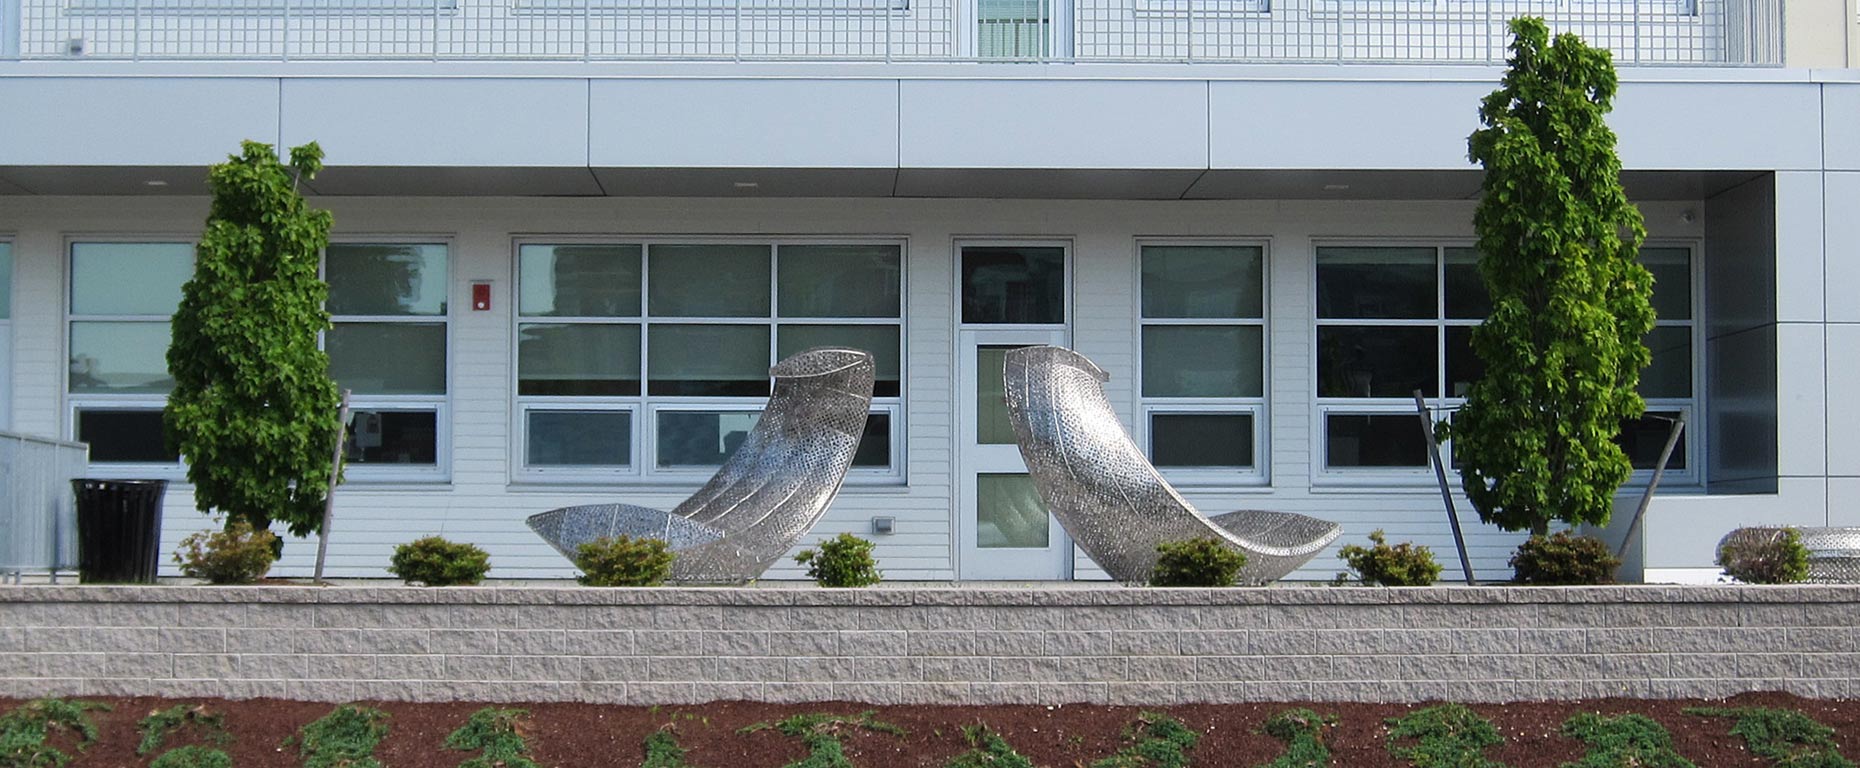 Making-Waves_5 sculptural seating and public art installation by Peter Diepenbrock  East Bay Met School  Newport Rhode island